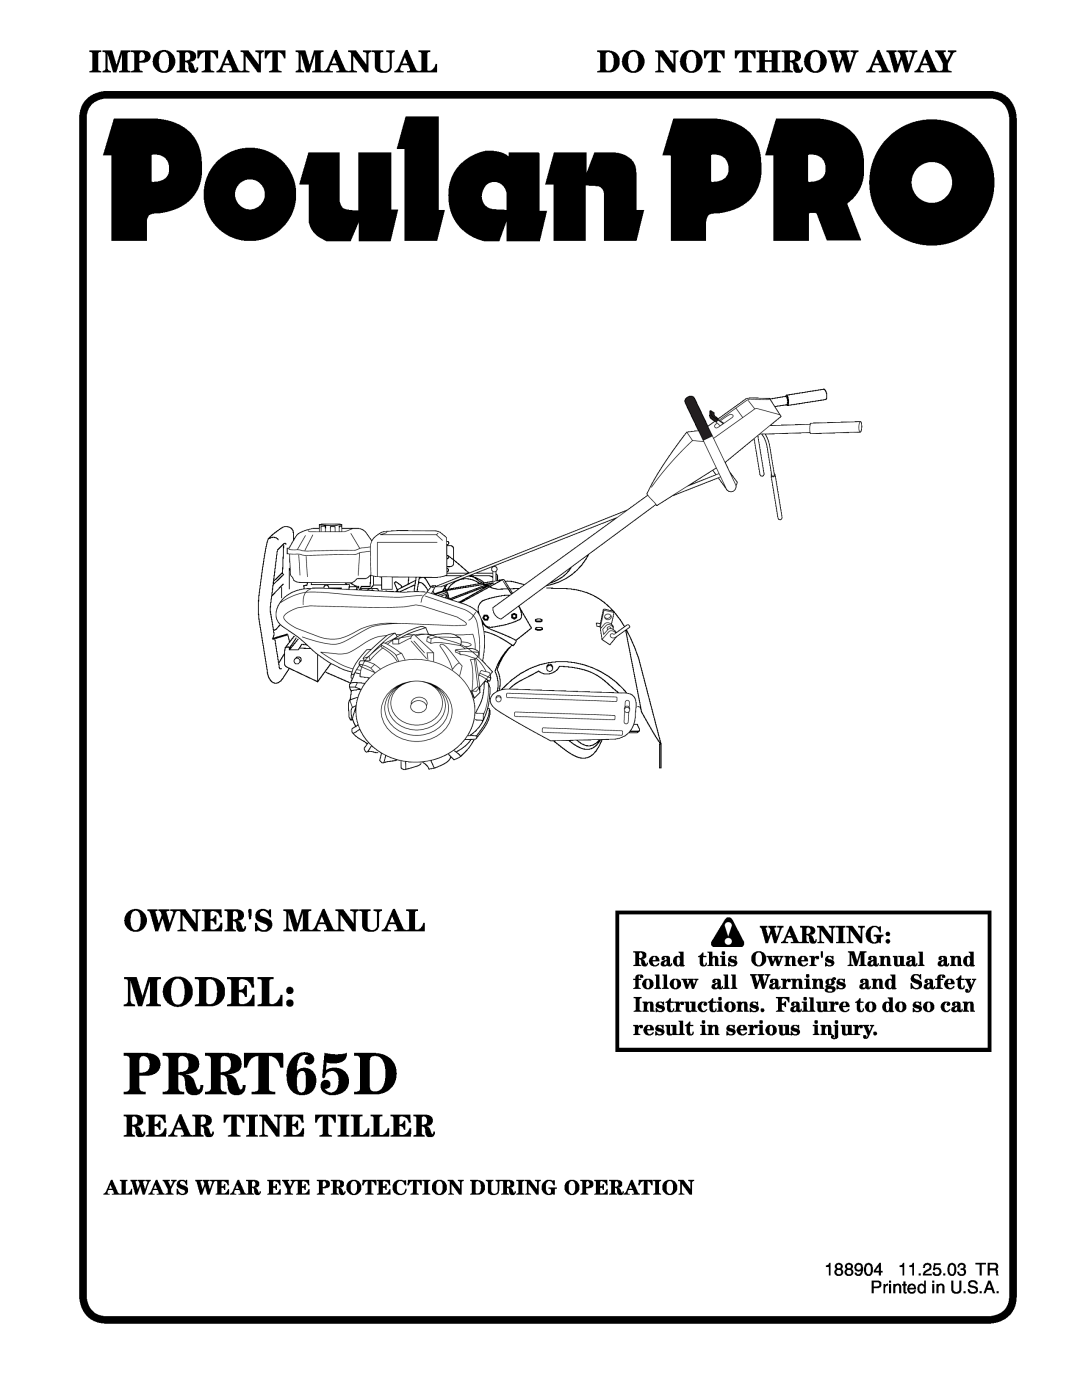 Poulan PRRT65D owner manual Model, Important Manual, Owners Manual, Rear Tine Tiller, Do Not Throw Away 